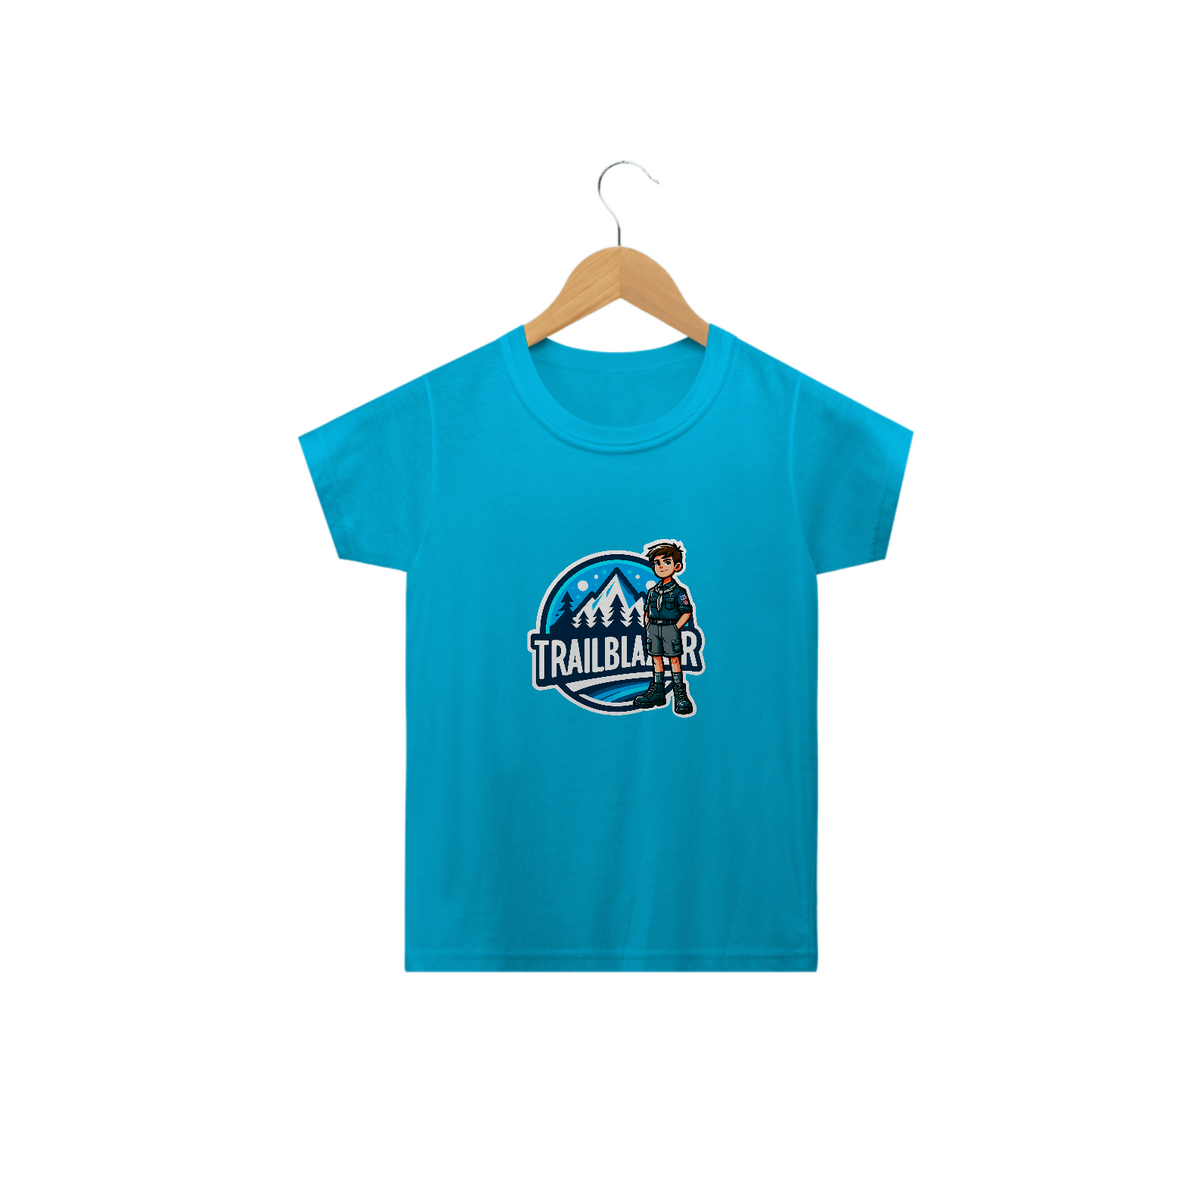 Nome do produto: Camiseta Infantil Trail Blair